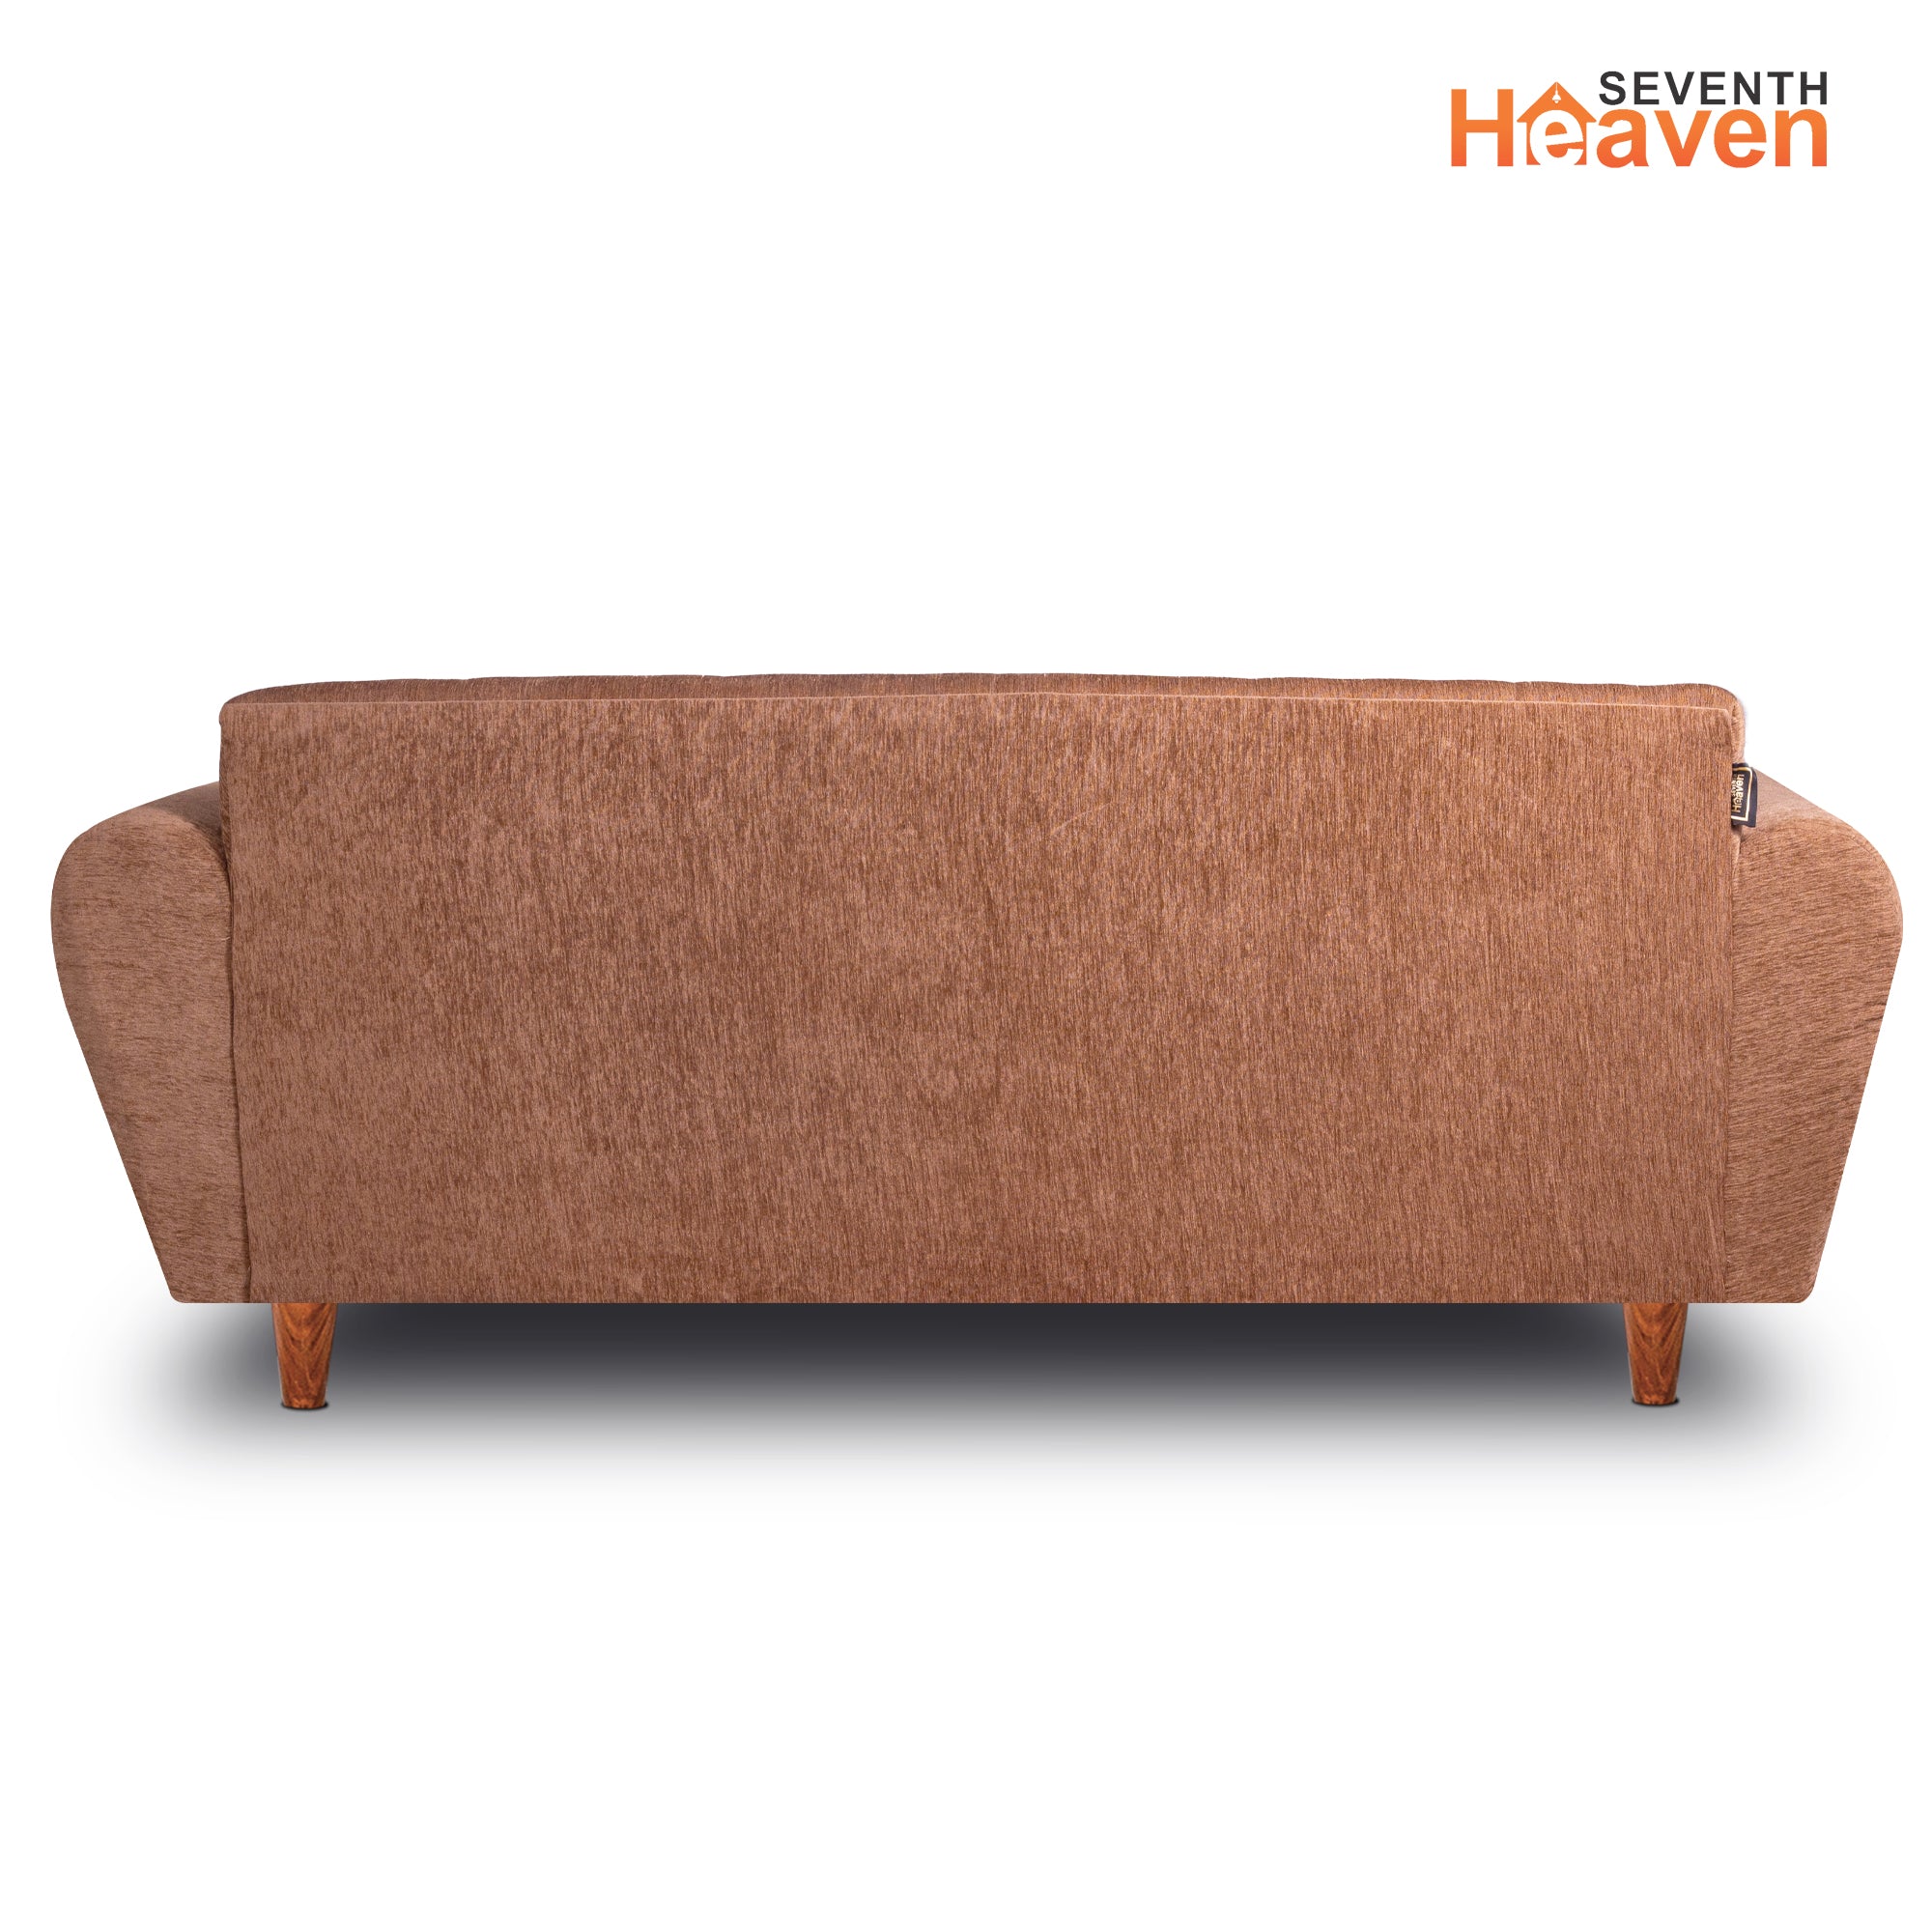 Seventh Heaven Milan 4 Seater Sofa with Ottoman, Chenille Molfino Fabric: 3 Year Warranty Fabric 4 Seater Sofa  (Finish Color - Beige, DIY(Do-It-Yourself))